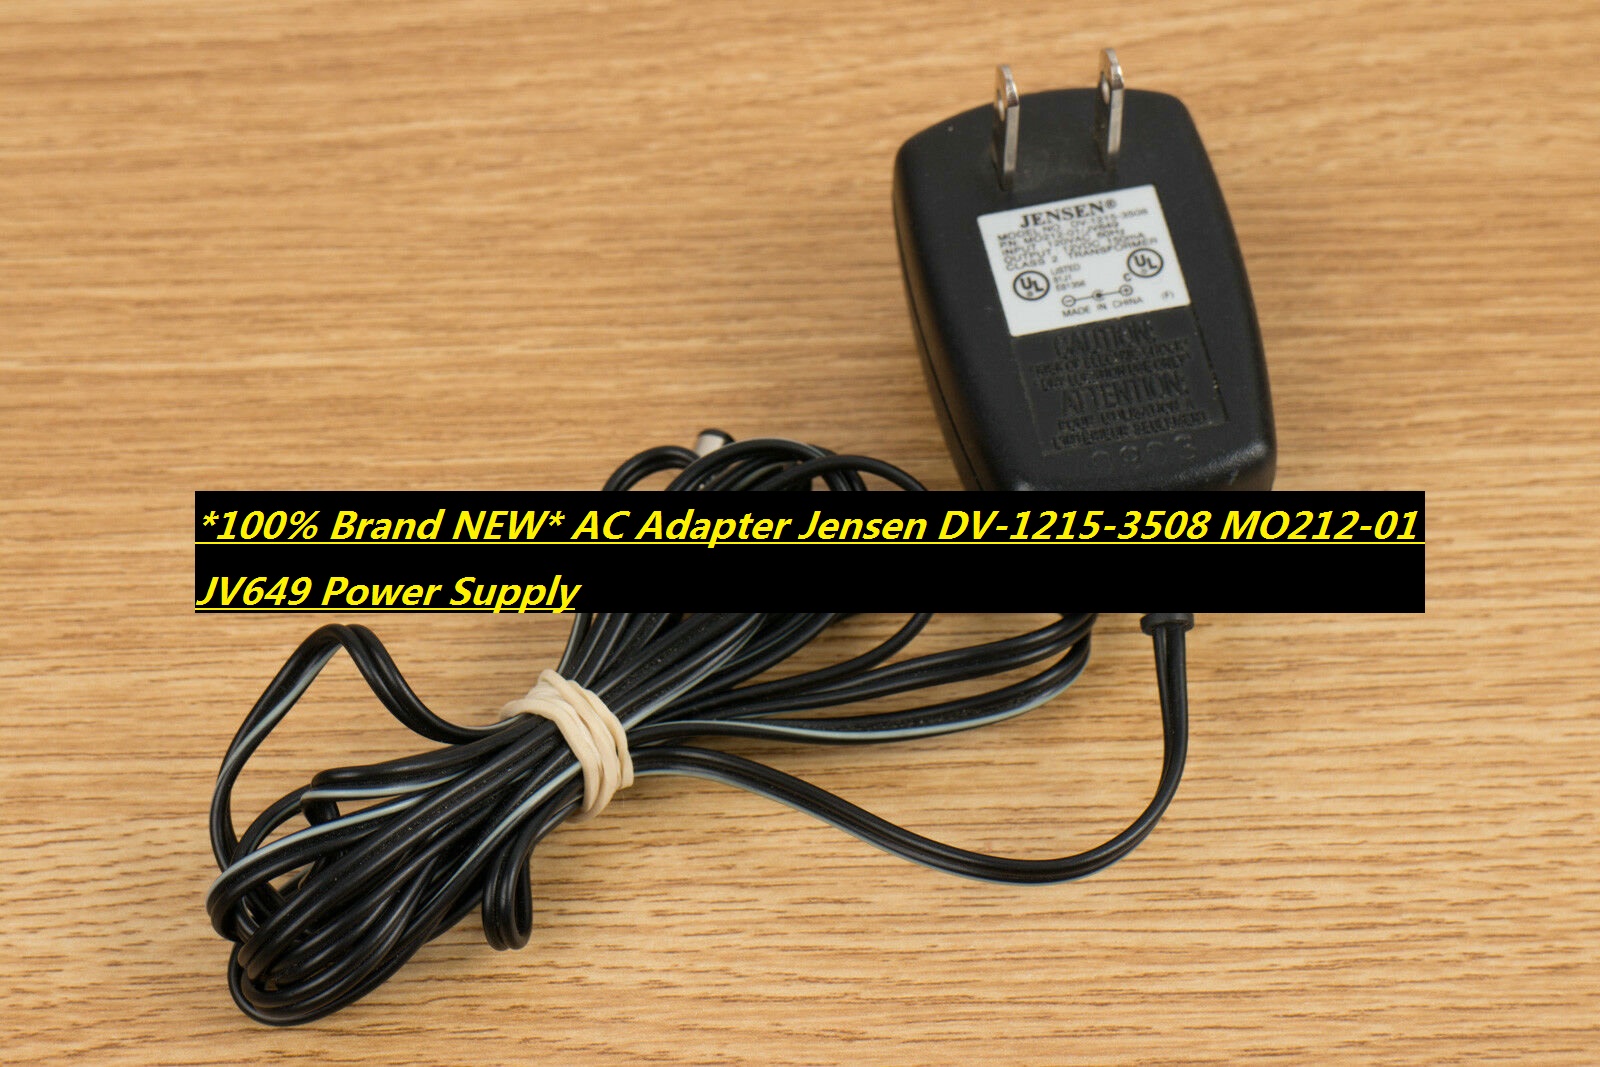 *100% Brand NEW* AC Adapter Jensen DV-1215-3508 MO212-01 JV649 Power Supply - Click Image to Close